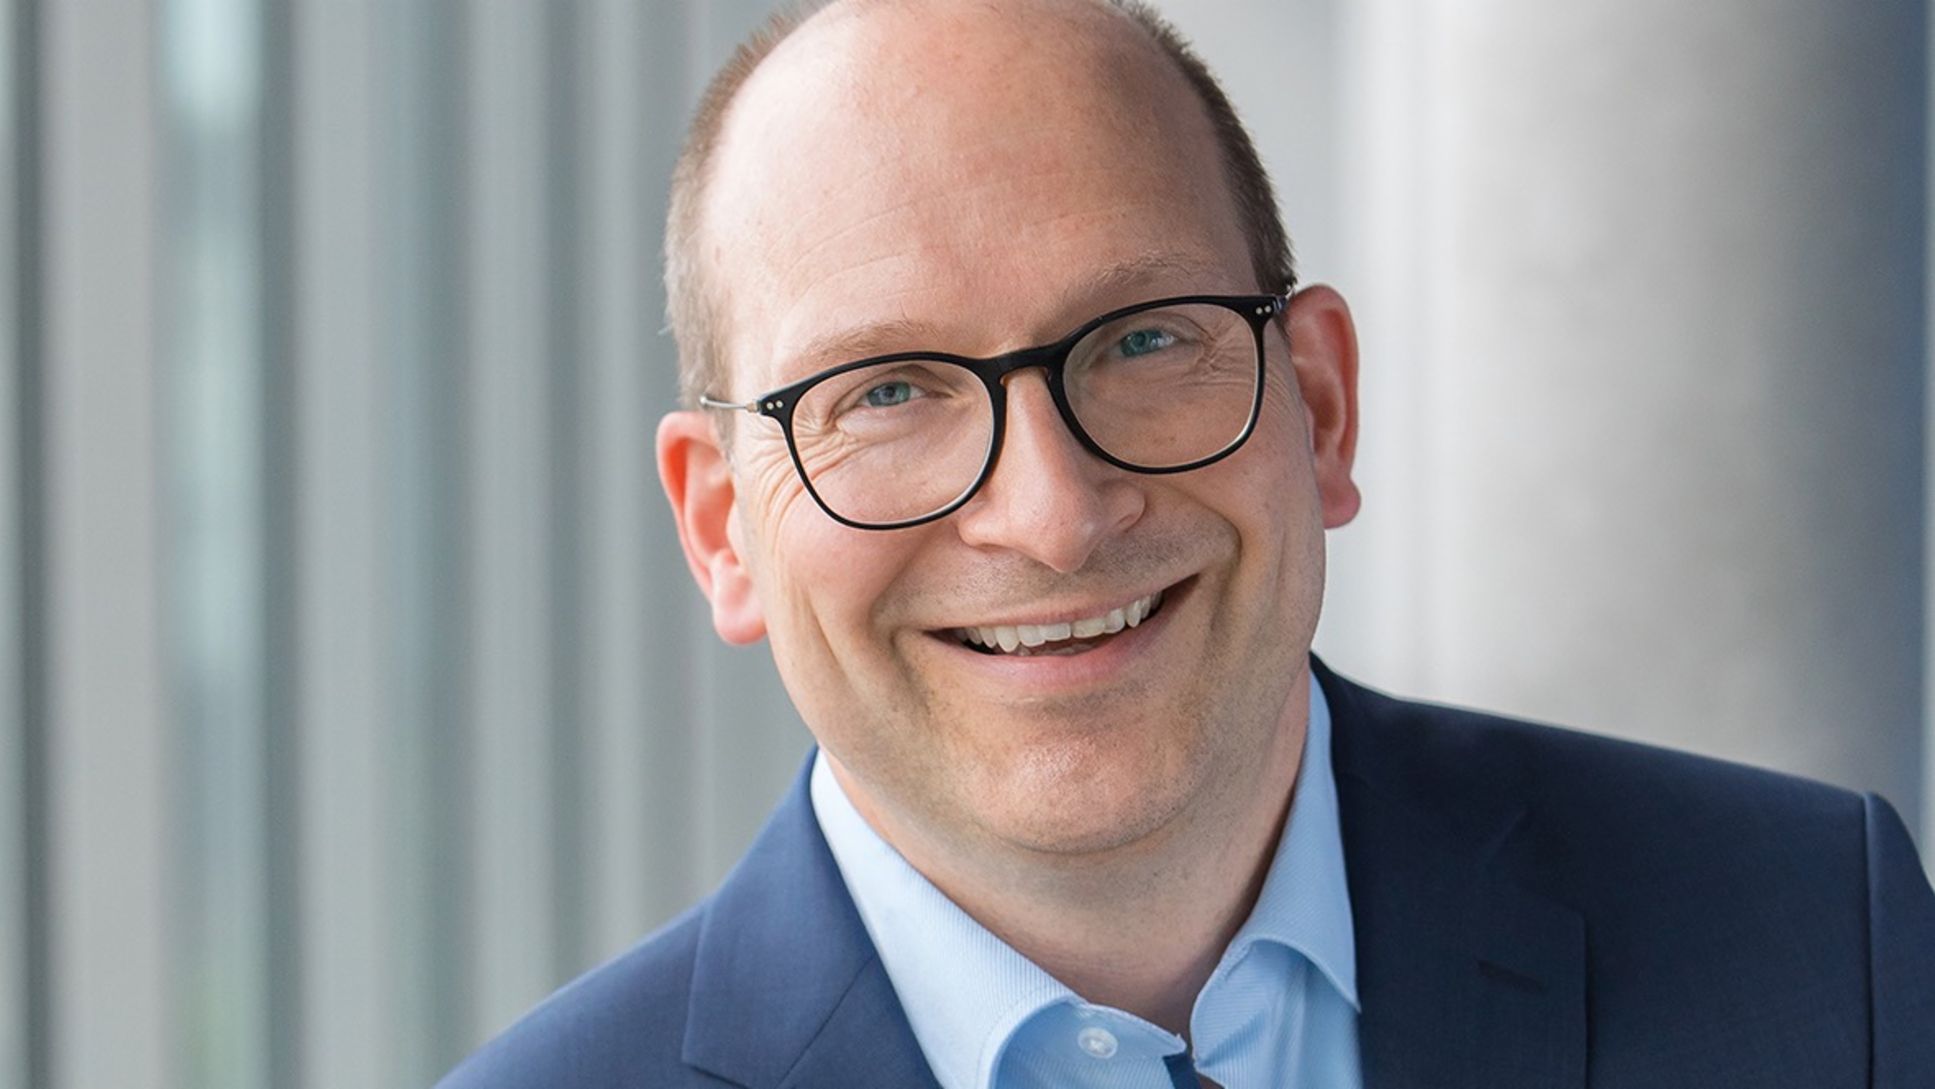 Michael-Christian Eberl, future CEO of Porsche Engineering, 2023, Porsche AG